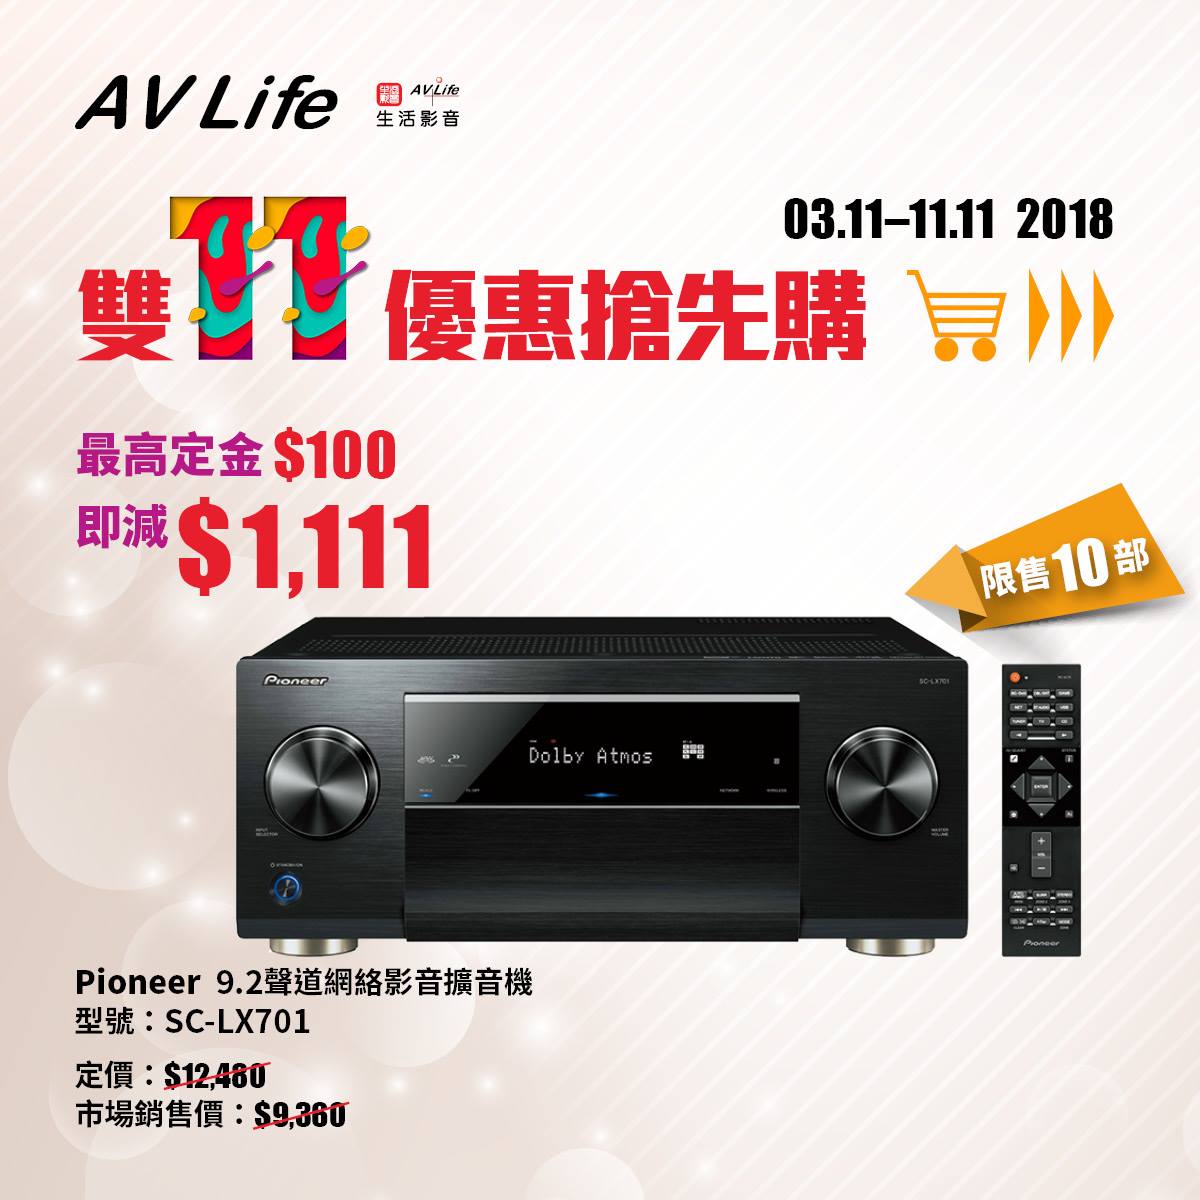 AV Life 生活影音低至25折店內優惠(11月5日更新)圖片12